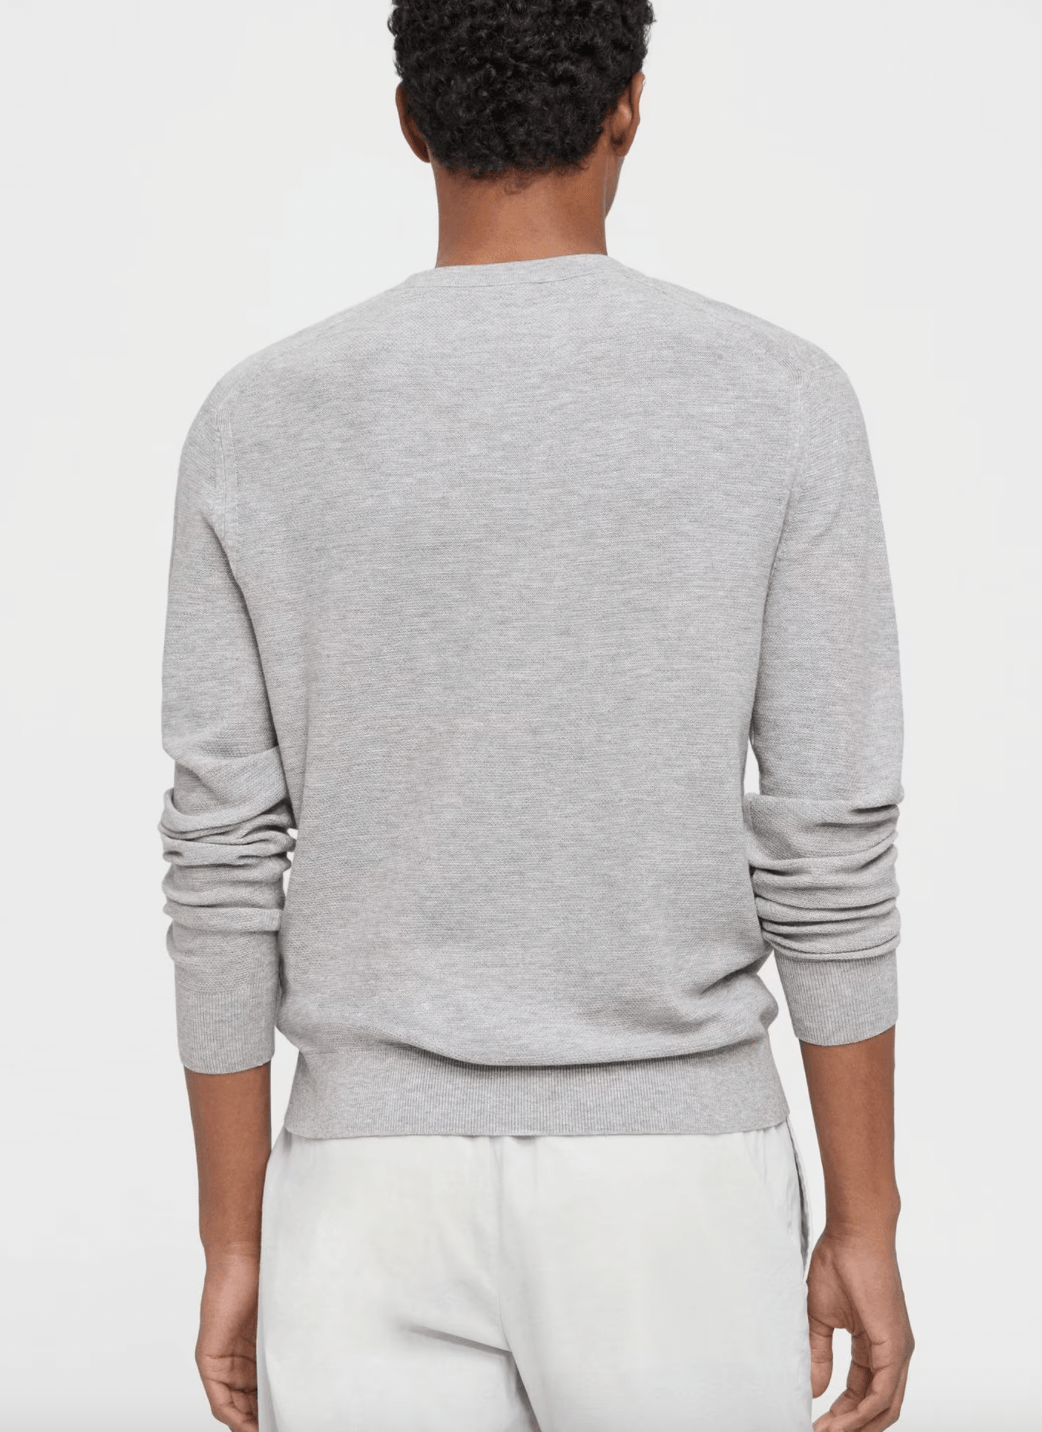 Theory Riland Sweater in Silver Heather - Estilo Boutique